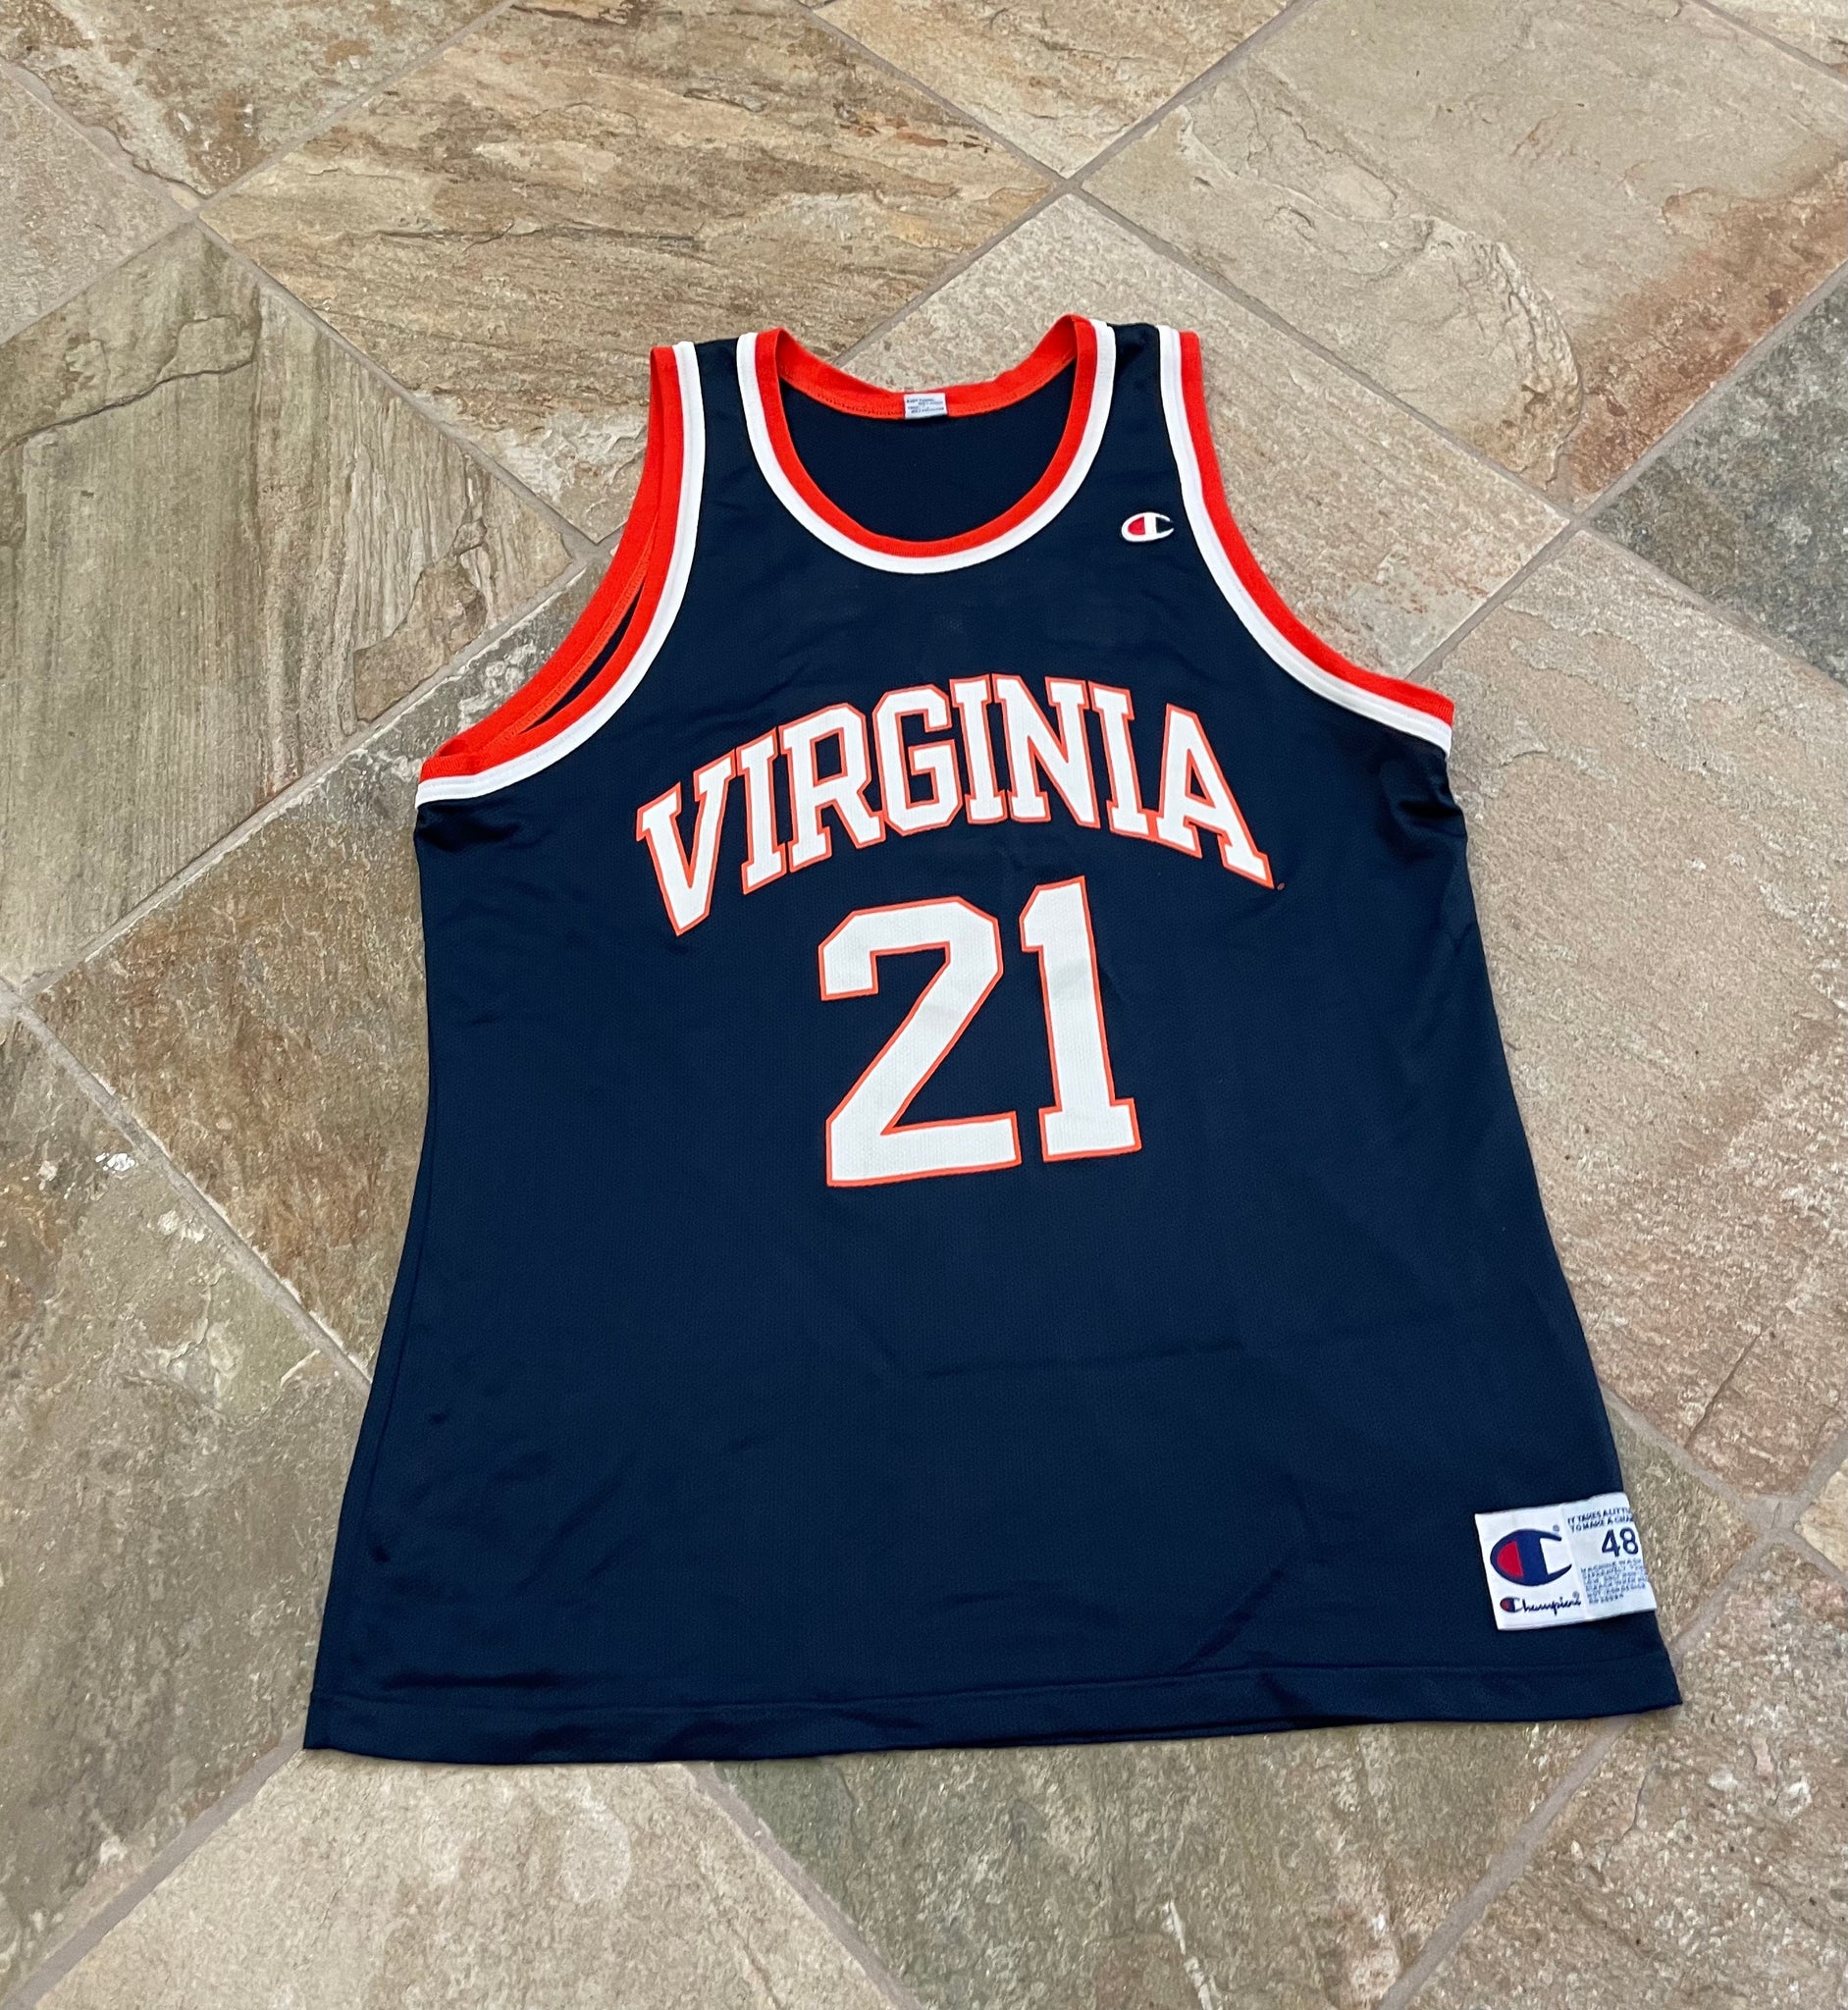 Virginia Cavaliers jersey history